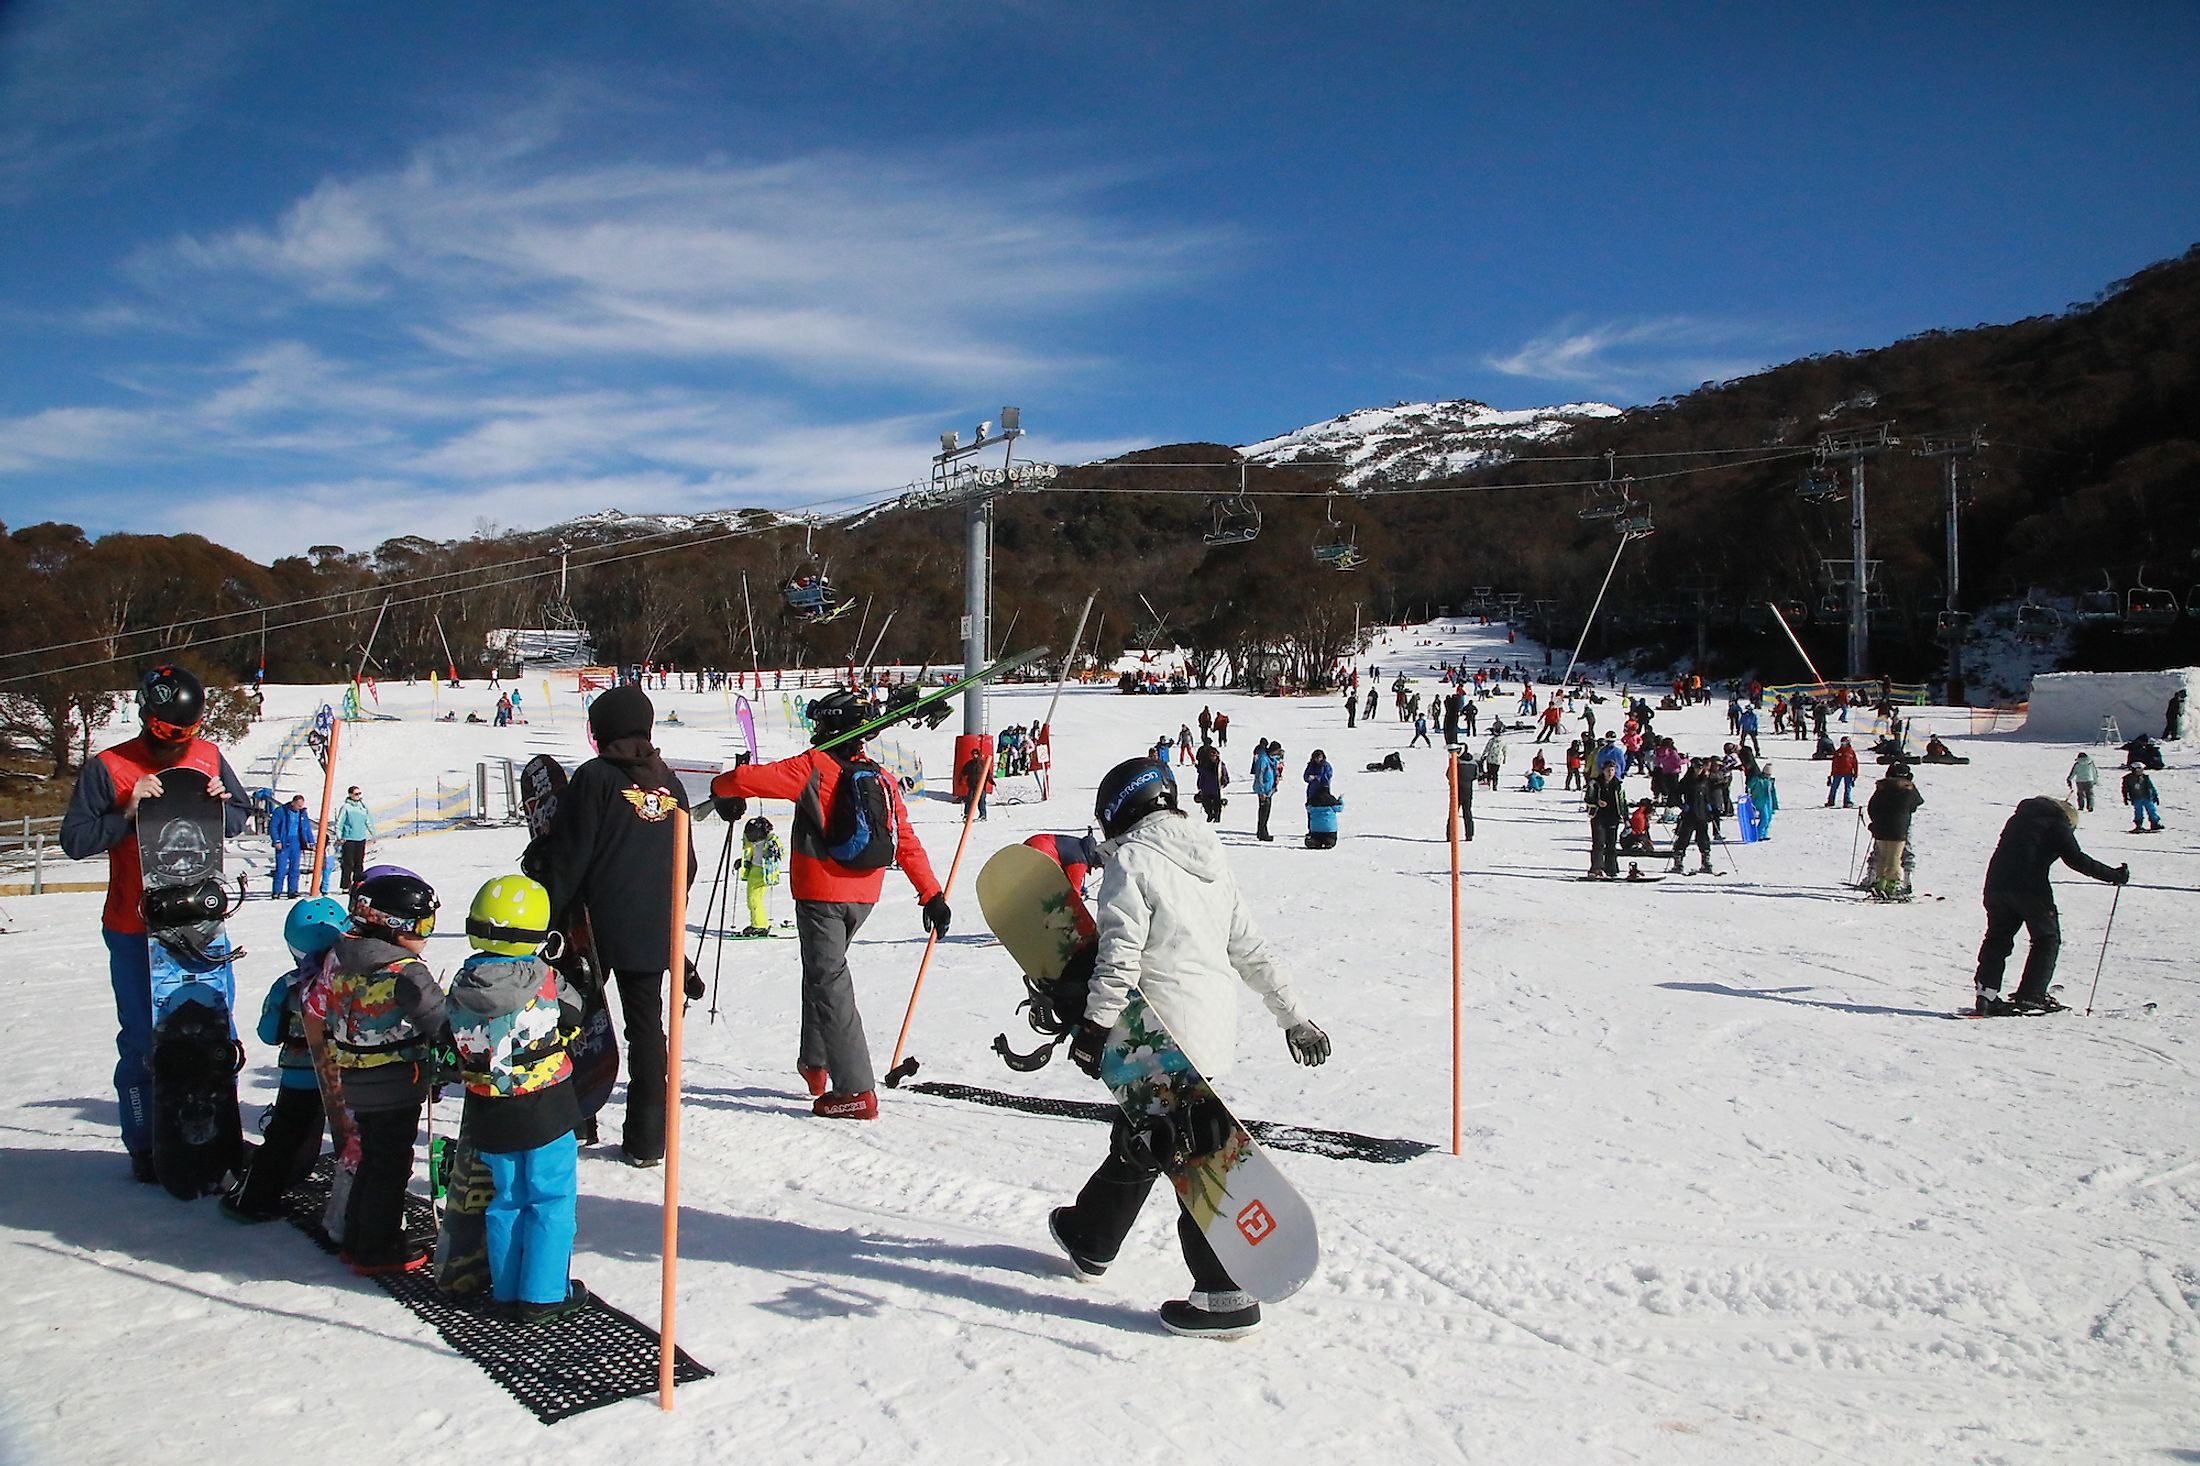 Thredbo ski resort in Australia. Editorial credit: litttree / Shutterstock.com